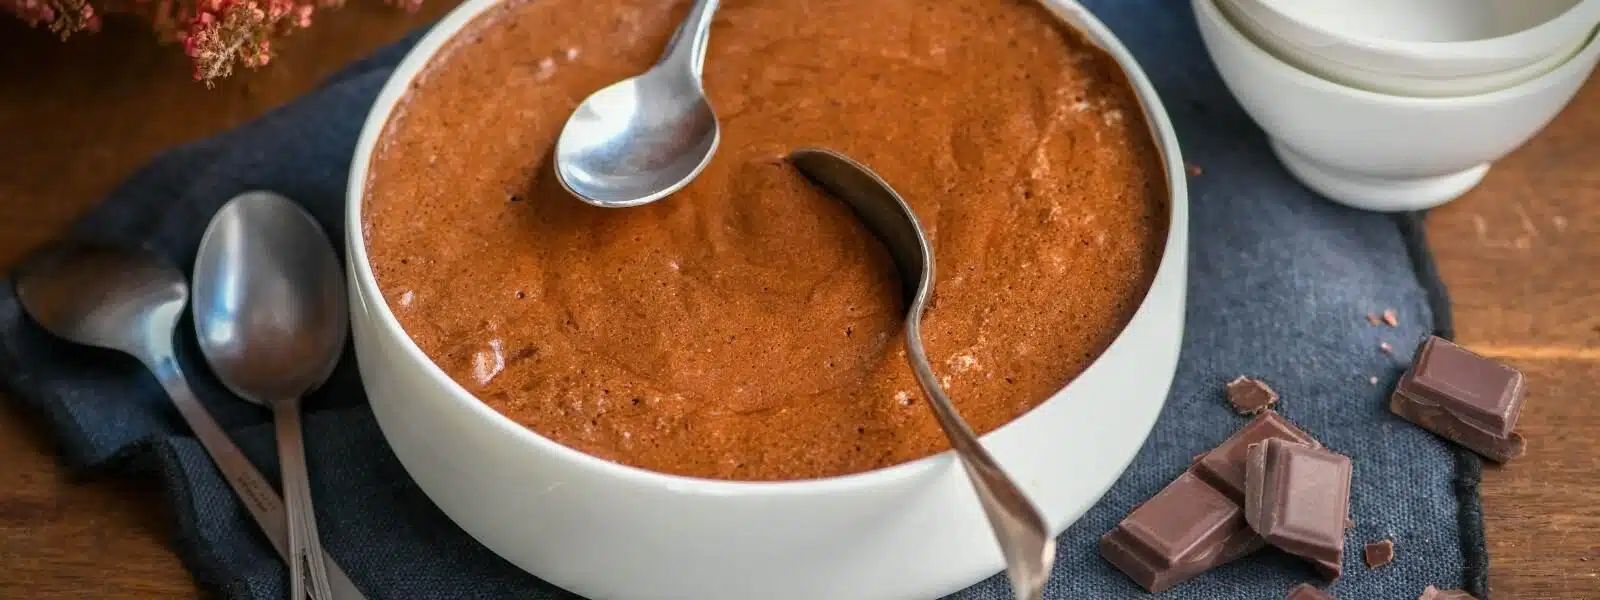 Mousse au chocolat vegan à l’aquafaba - 3390